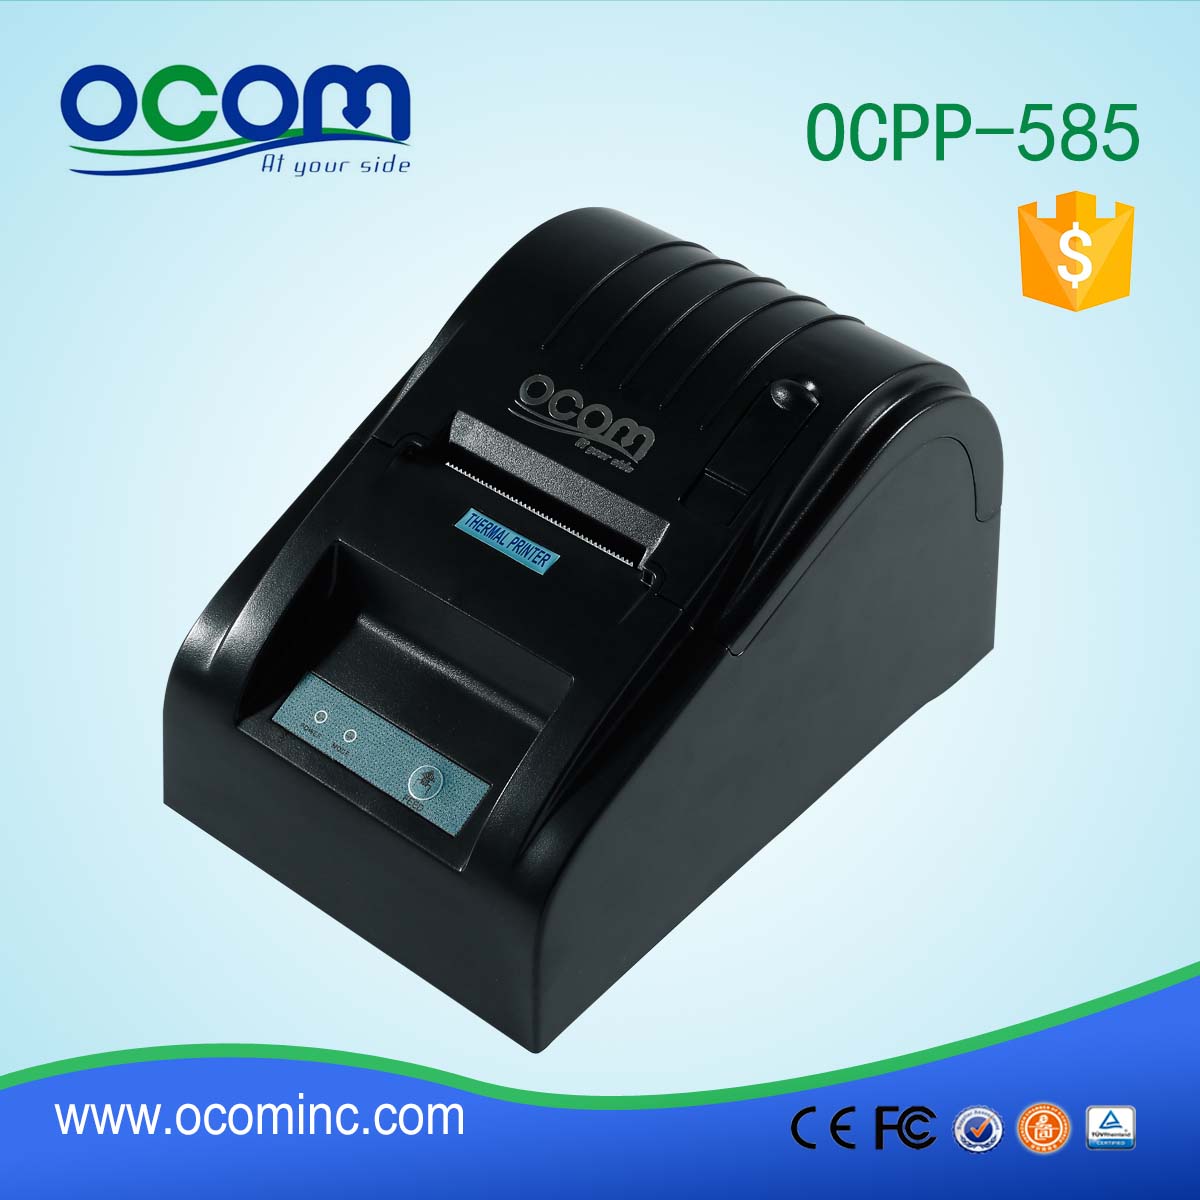 OCPP-586-L Φτηνές εκτυπωτές θερμικής εκτύπωσης 58 χιλιοστών LAN